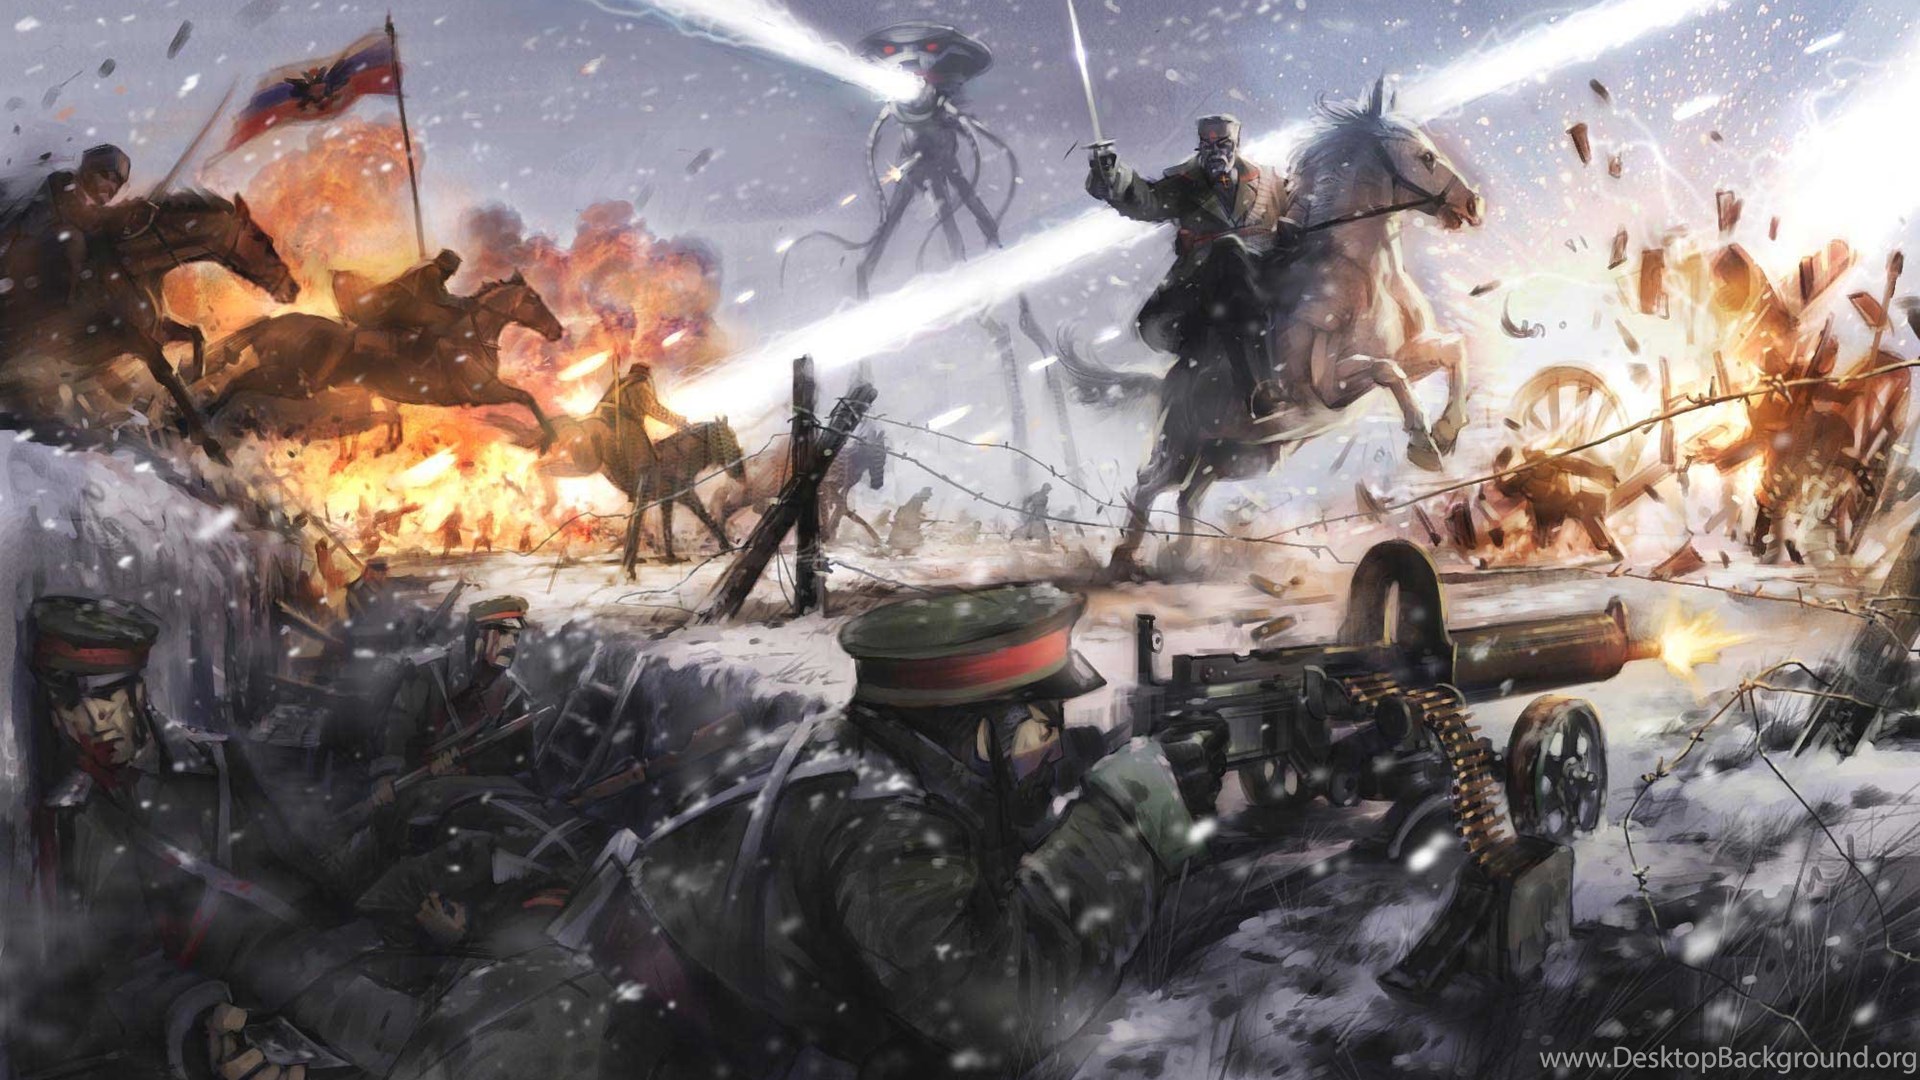 WAR OF THE WORLDS Adventure Thriller Sci fi Wallpaper Desktop Background